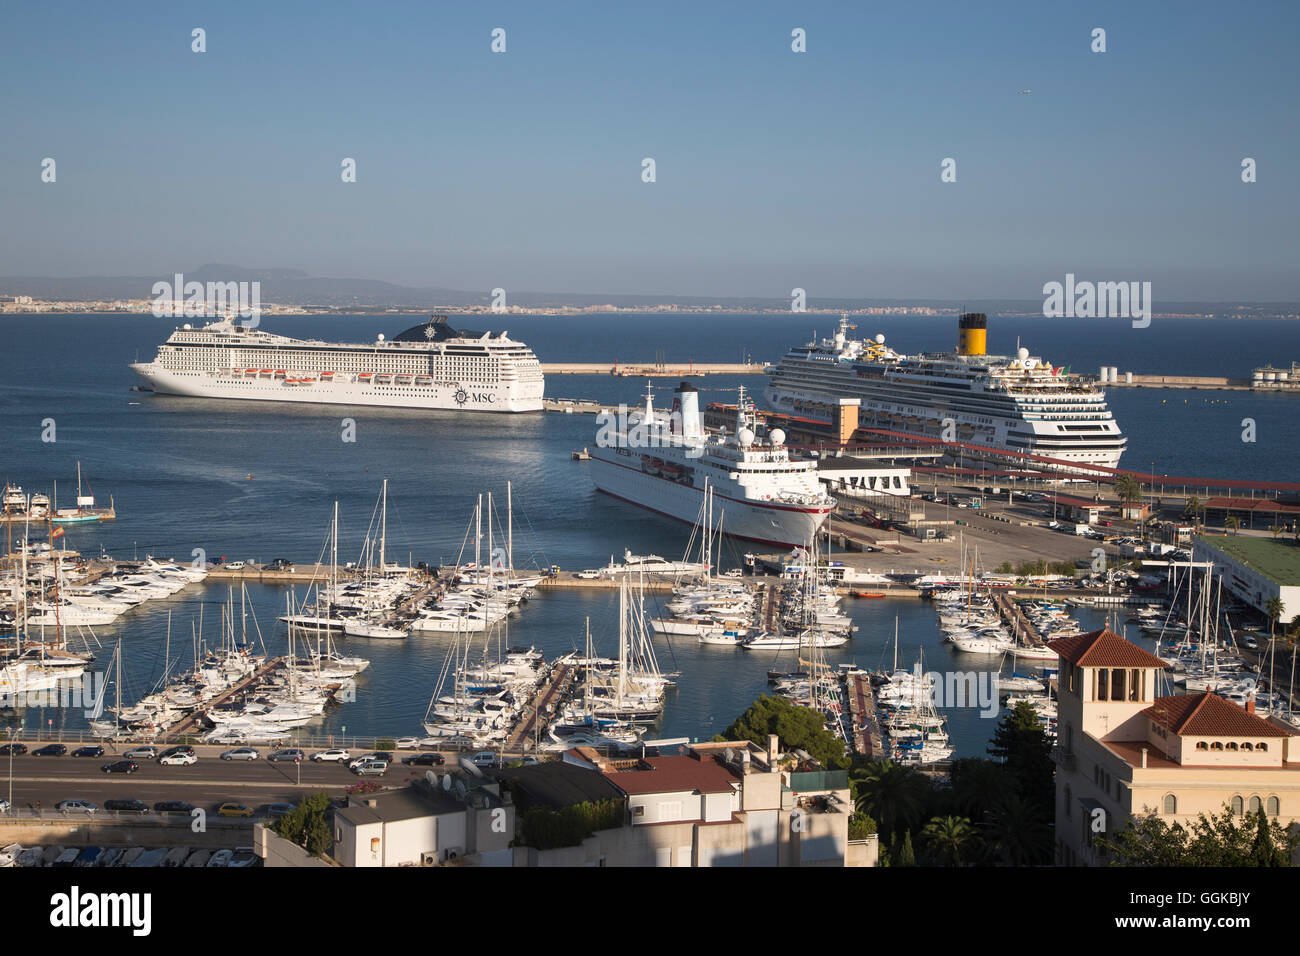 Cruise ships MS Deutschland (Reederei Peter Deilmann), MSC Musica (MSC Cruises) and Costa Favolosa (Costa Crociere) at Palma Cru Stock Photo